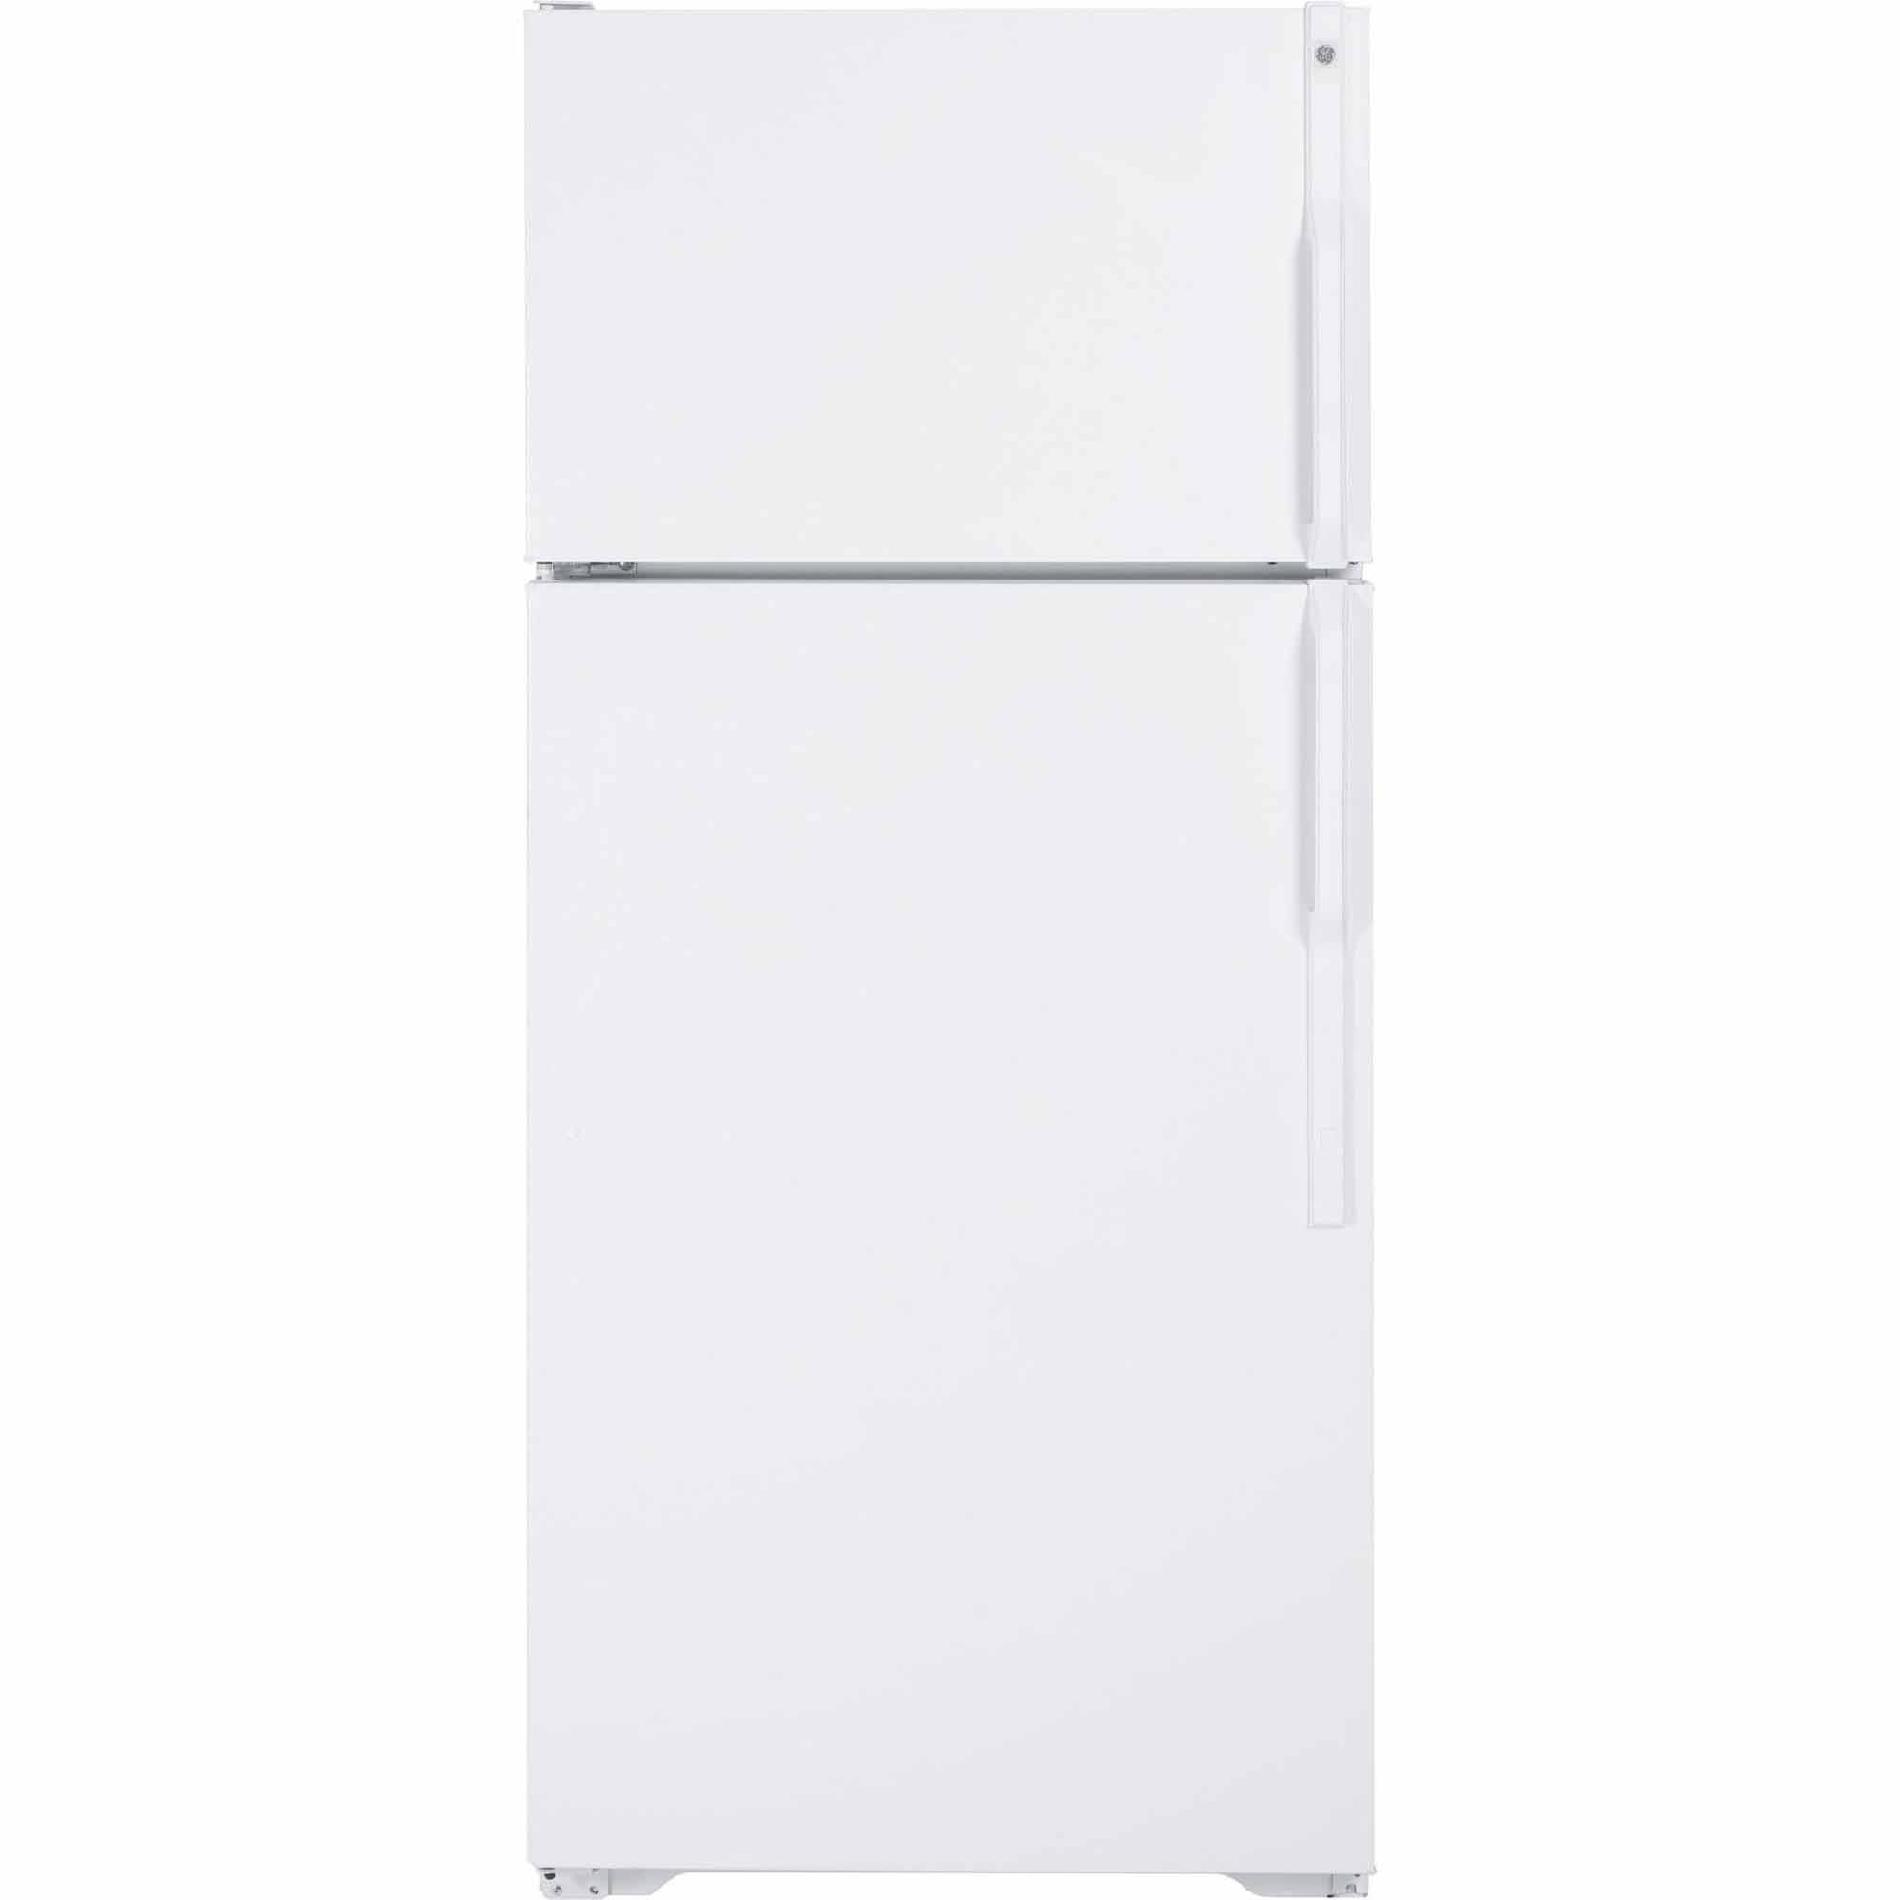 GE Appliances GTS16DBELWW 15.7 cu. ft. Top-Freezer Refrirator Left Hin - White